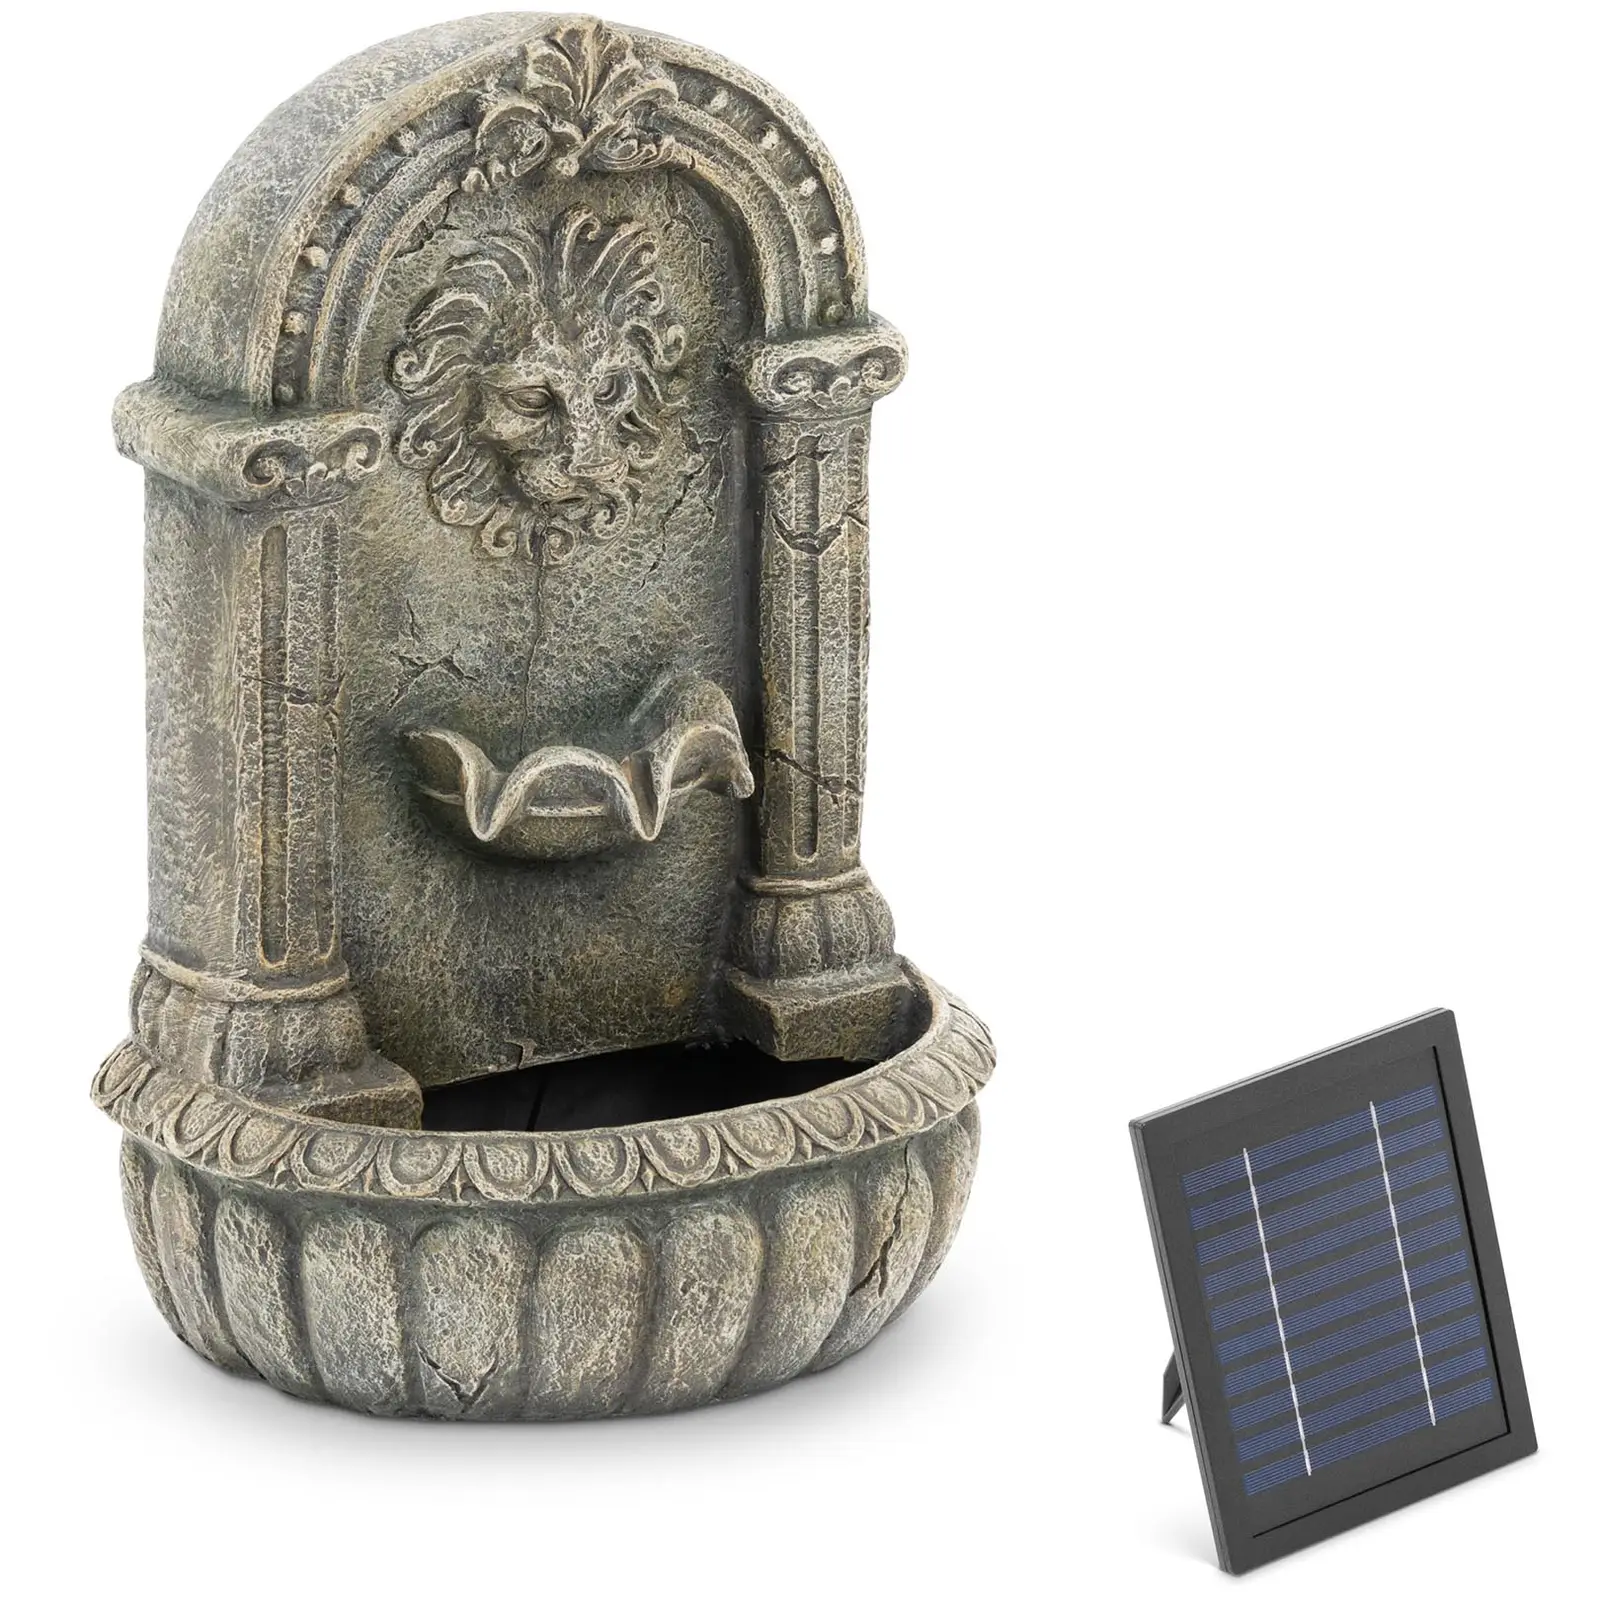 Solar garden fountain - spouting lion's head on decorated basin - LED lighting